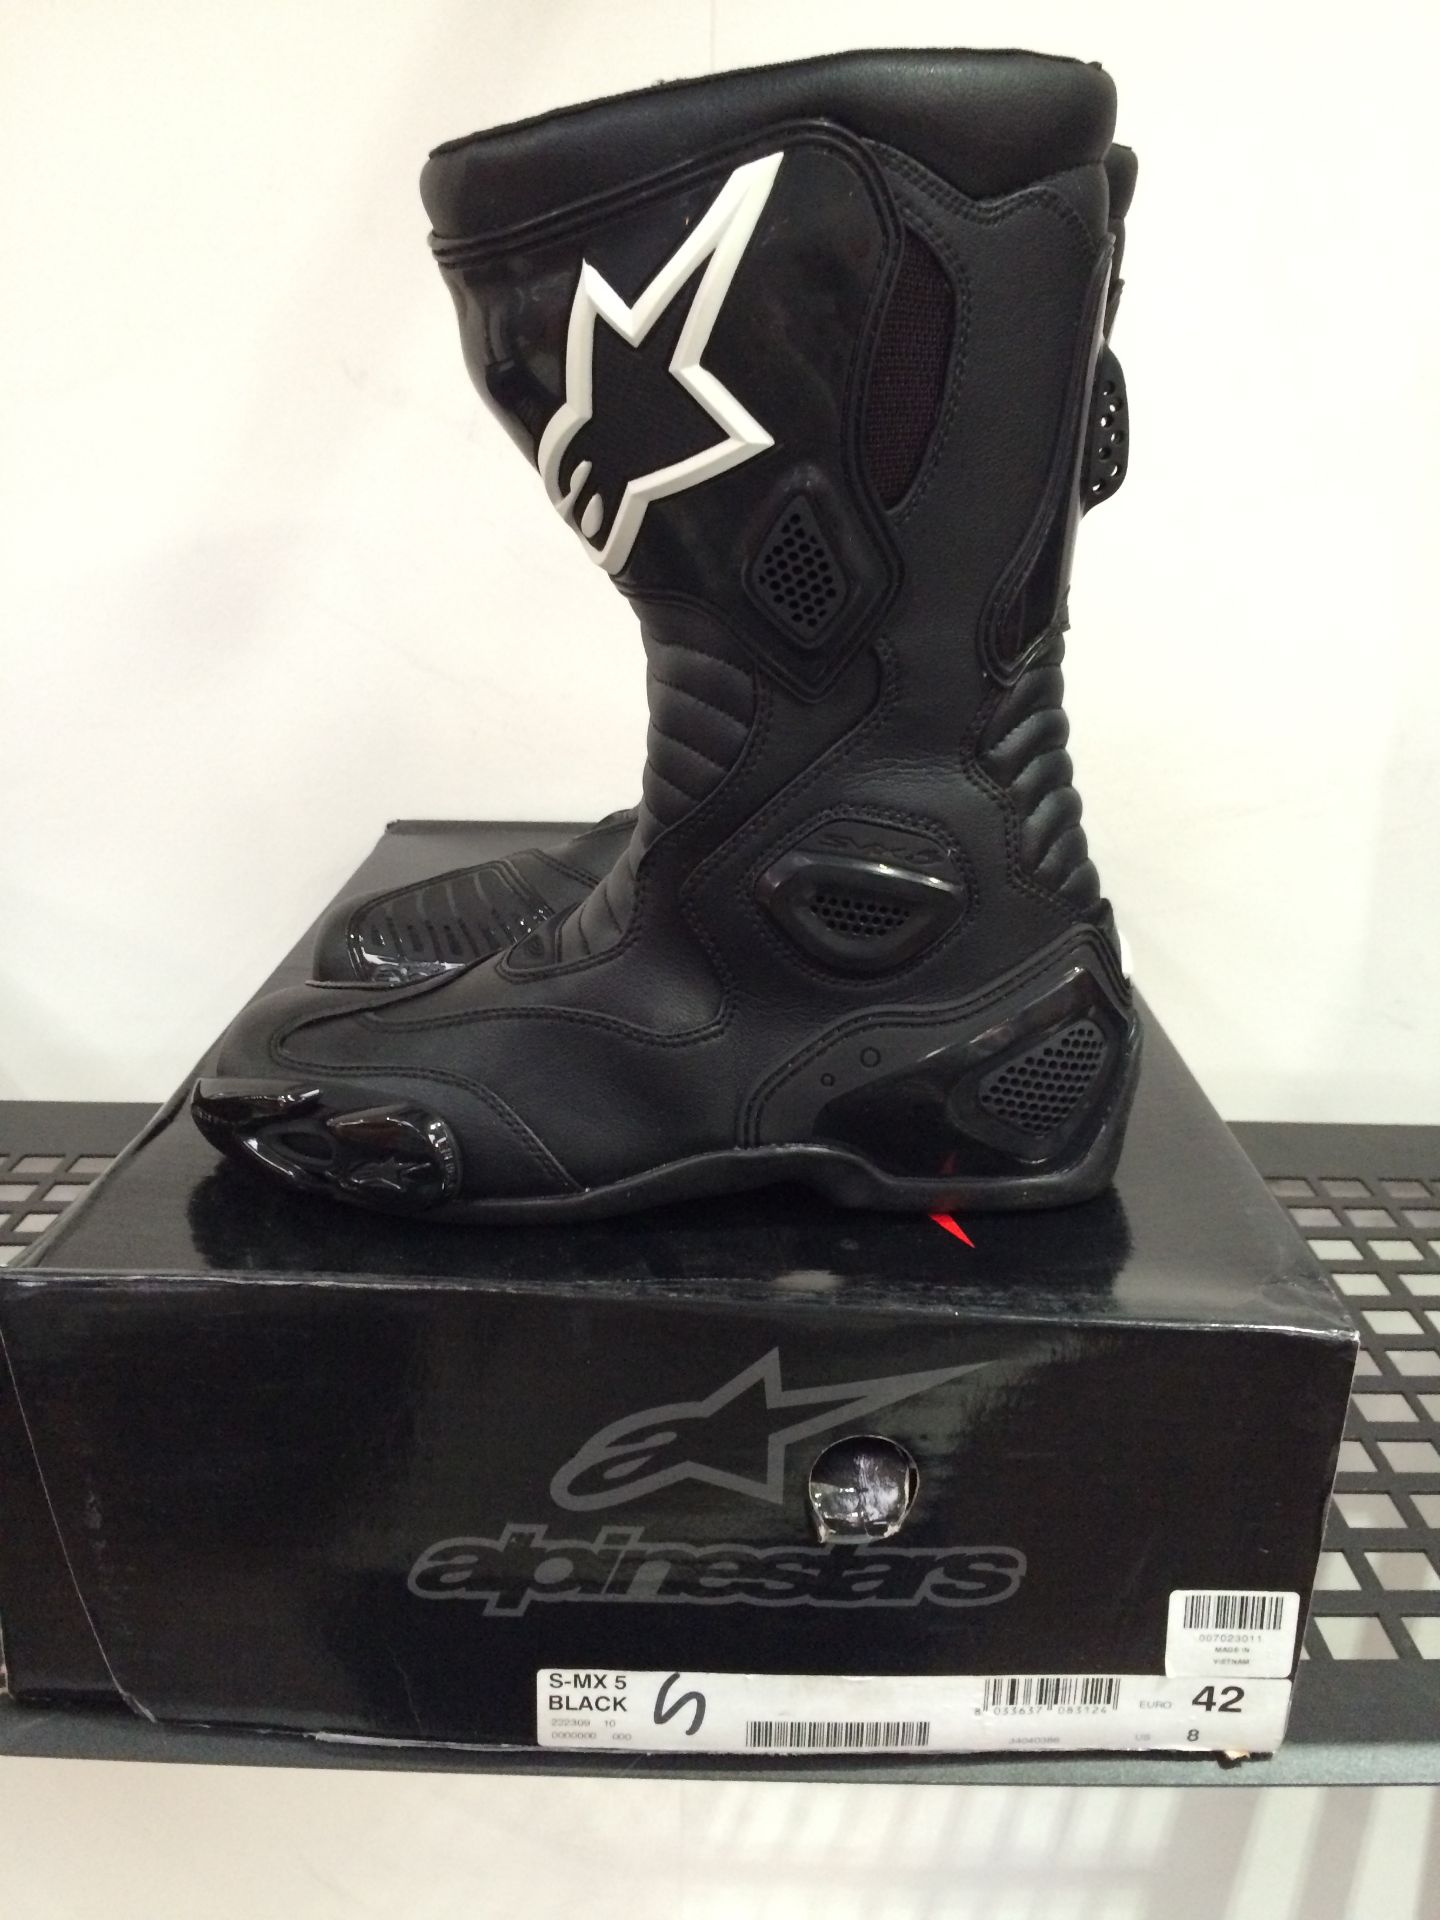 Alpinestars SMX 5 Black boots. Size US 8 (42)